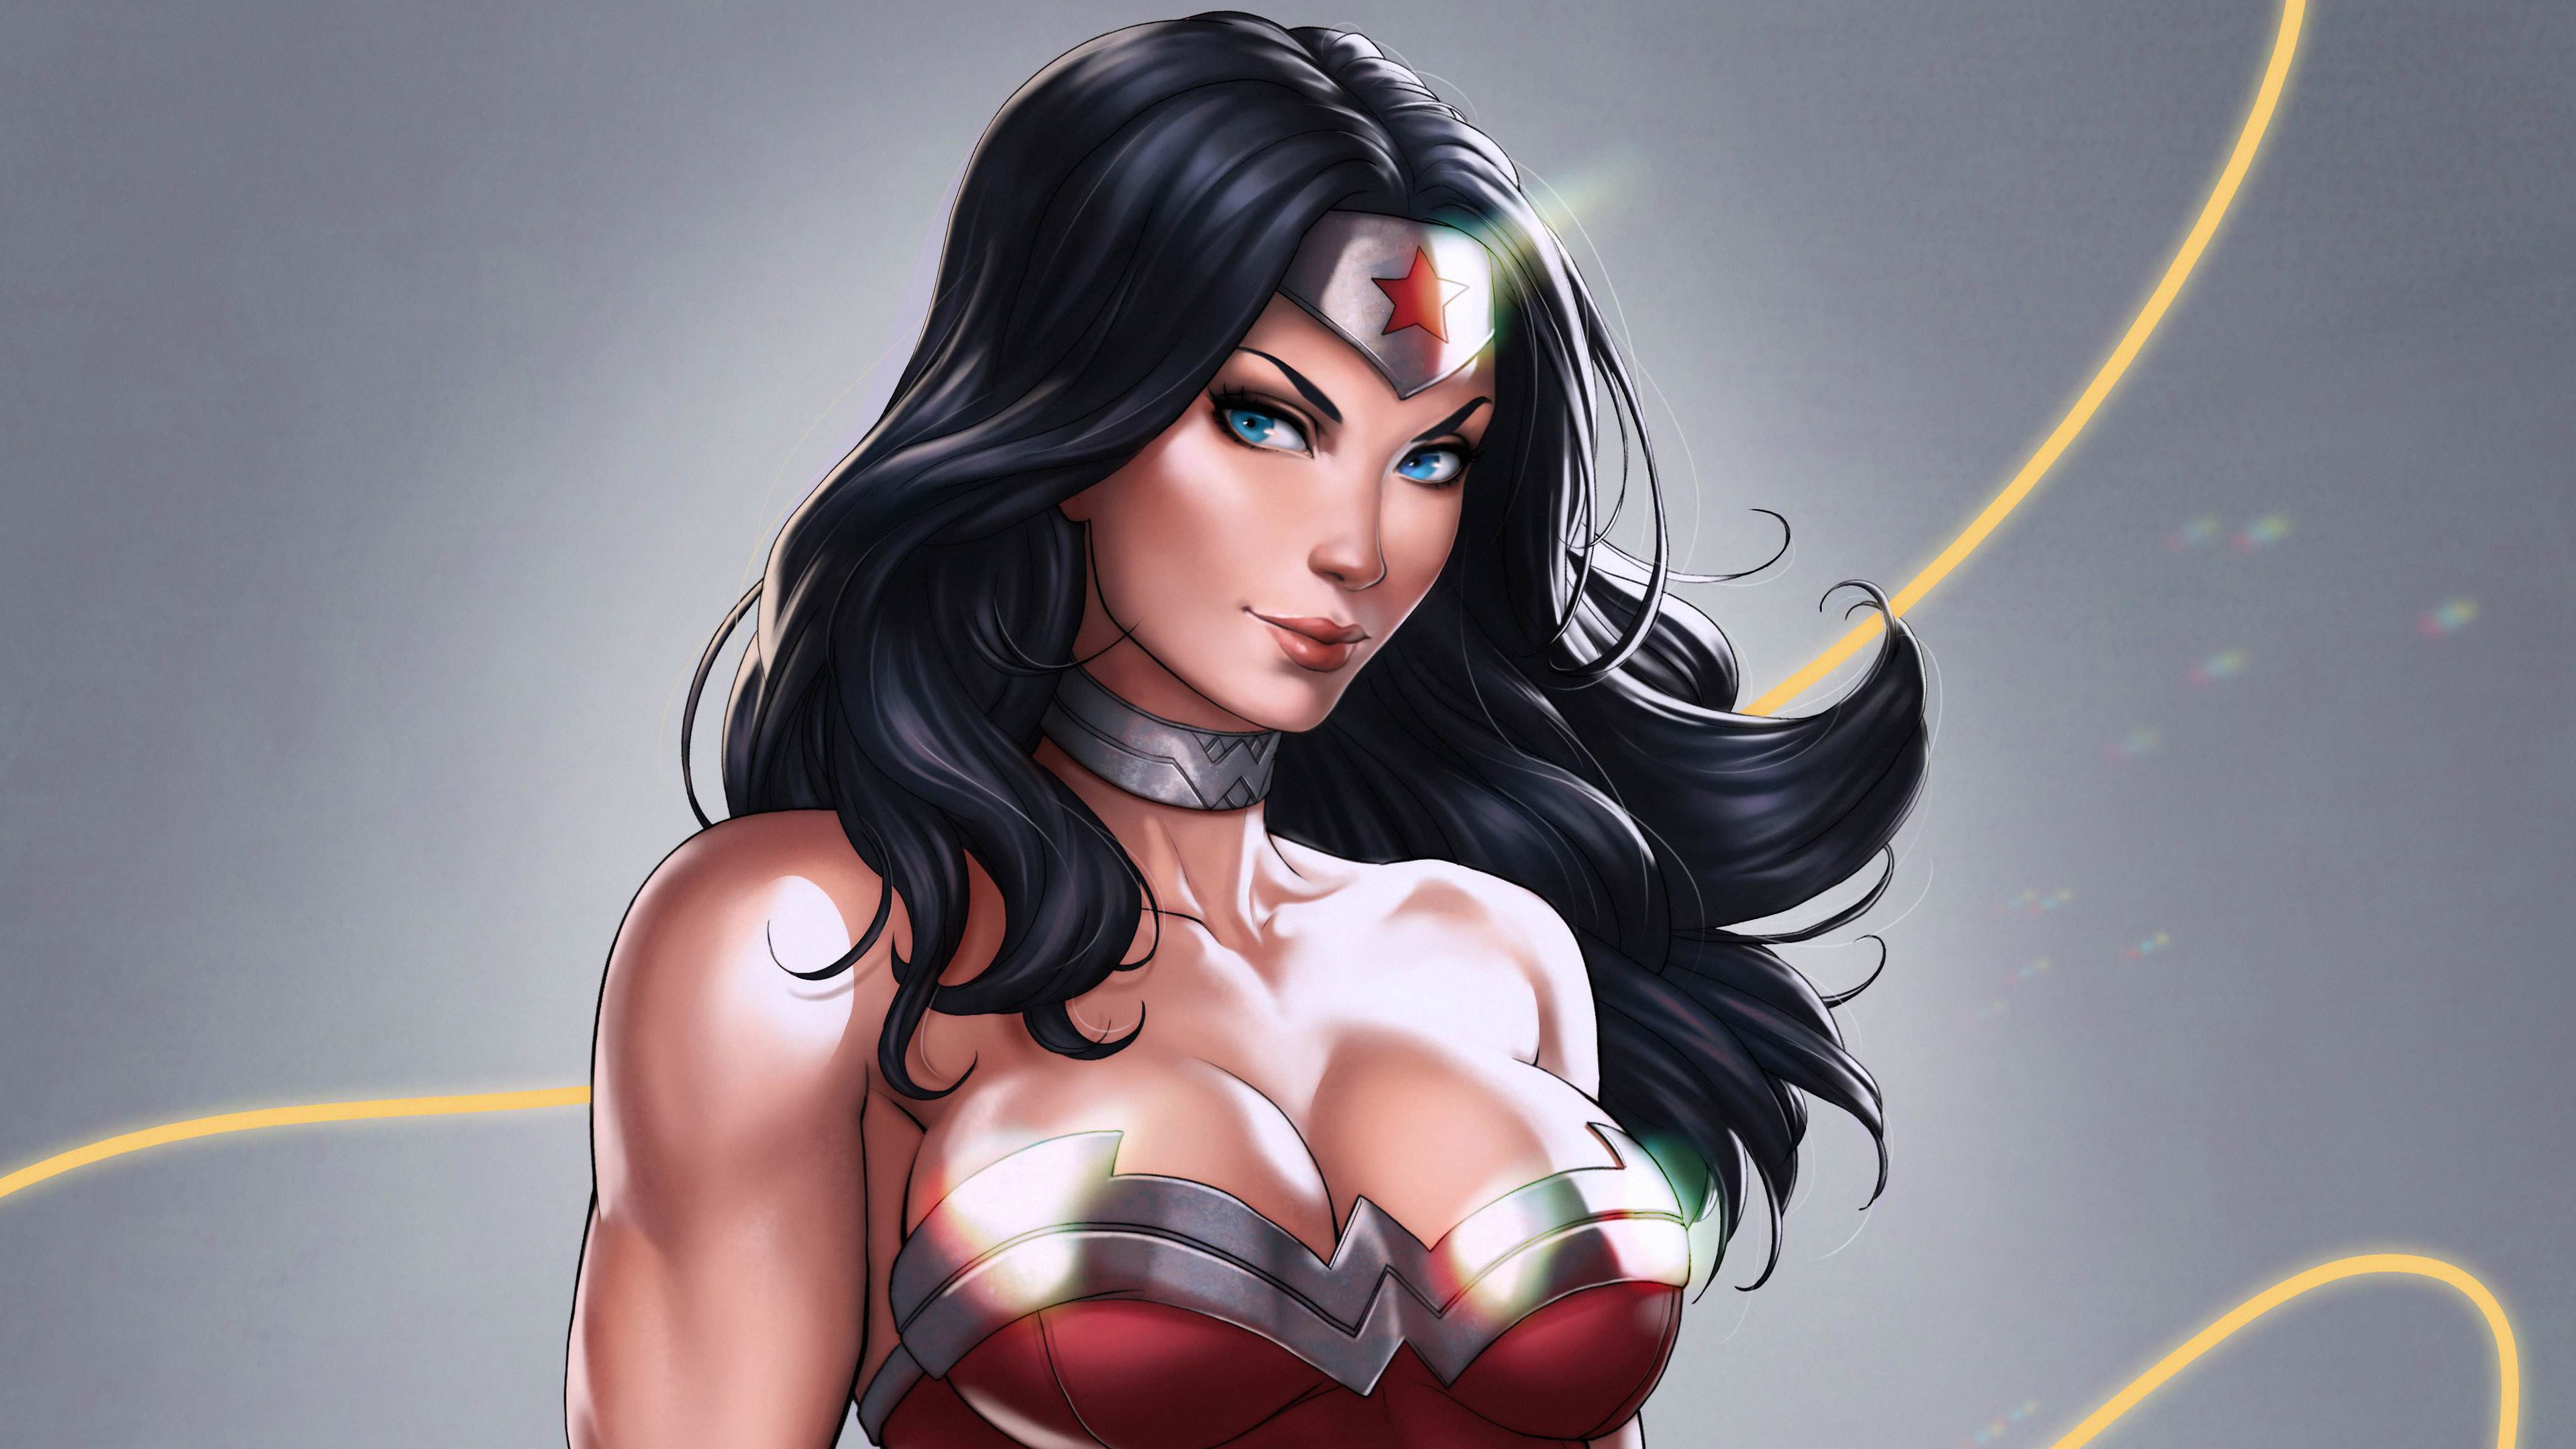 Wallpaper 4k Dc Comics Wonder Woman 4k Wallpaper, Artist